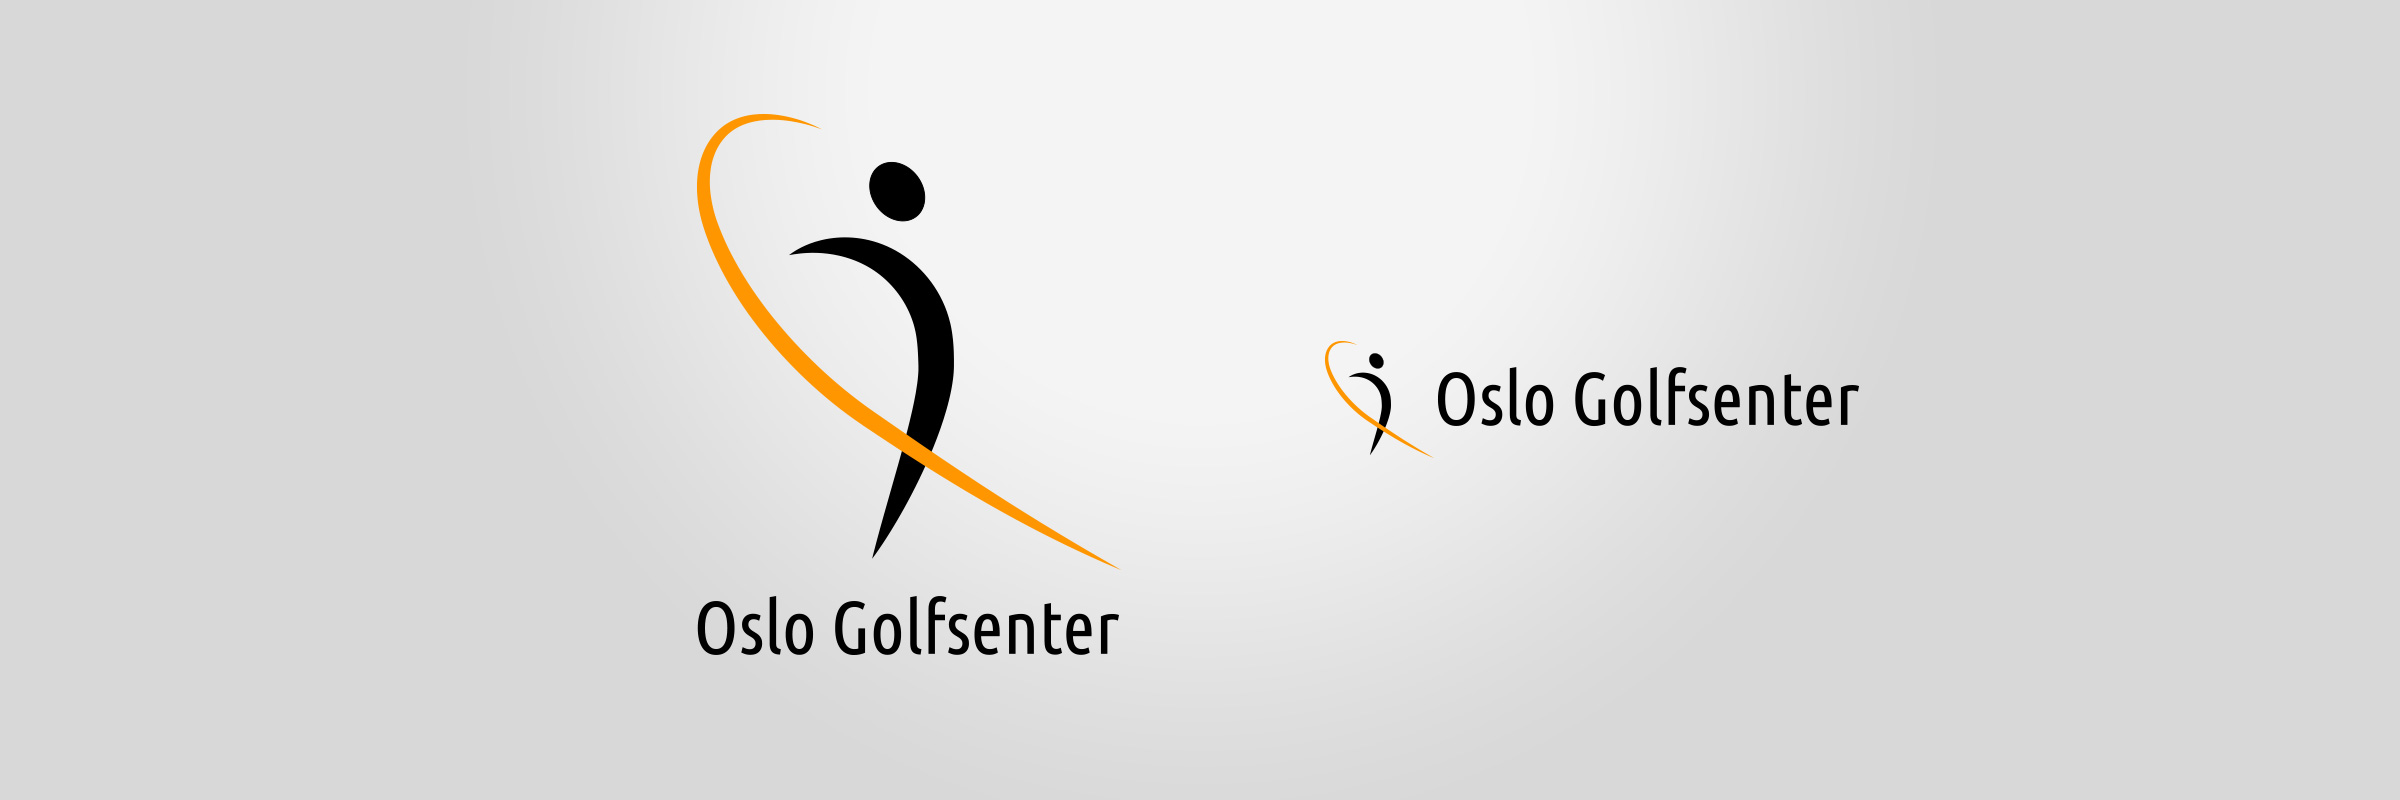 Showcase for Oslo Golfsenter